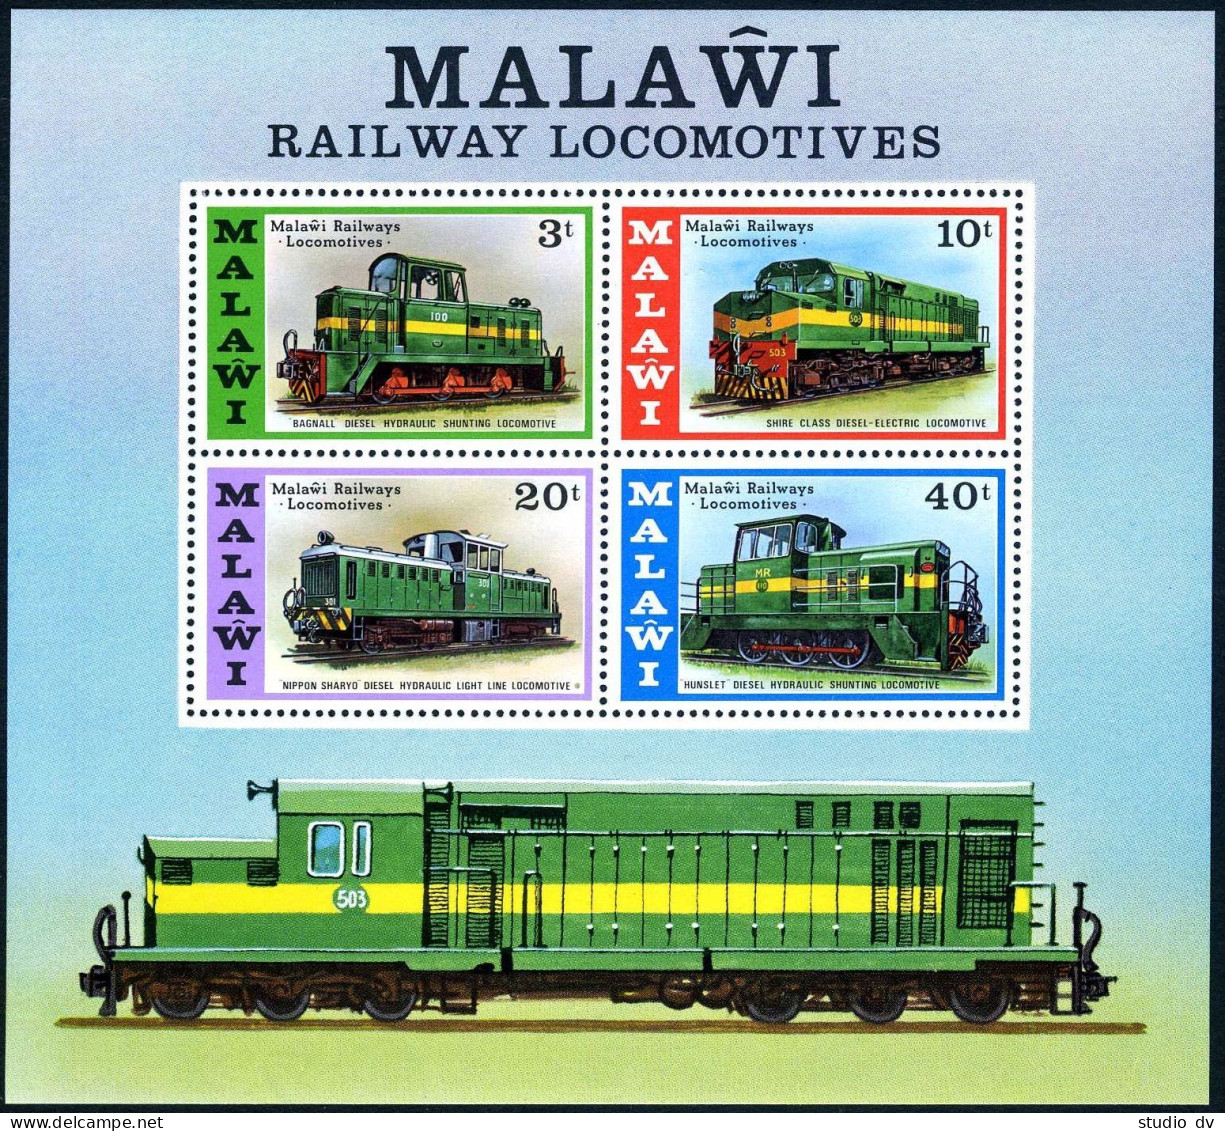 Malawi 289-292,292a Sheet,MNH.Michel 267-270,Bl.45. Railway Locomotives,1976. - Malawi (1964-...)